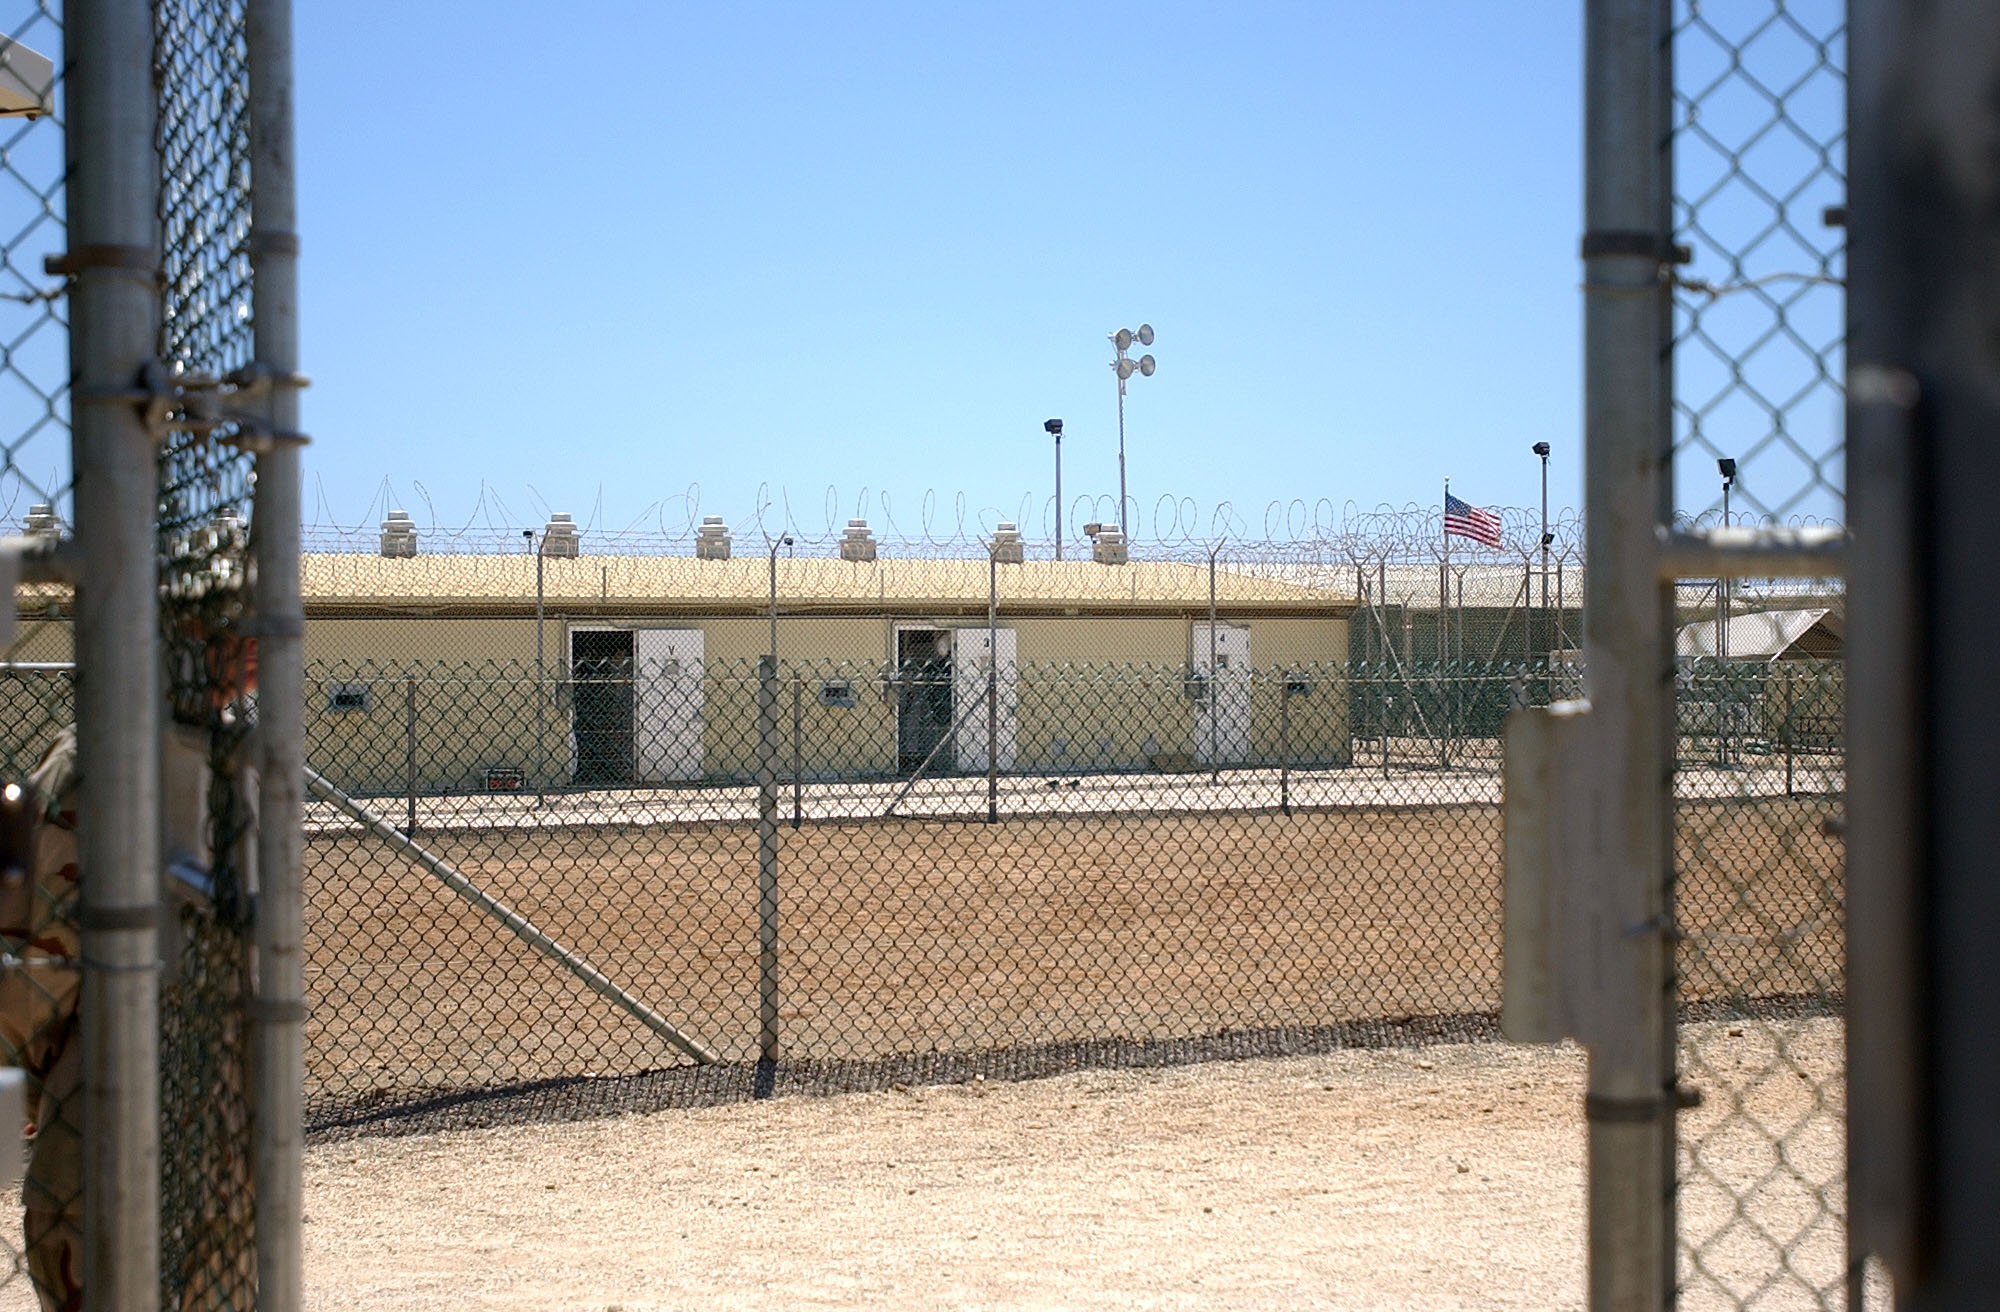 Guantanamo detainee hearing resumes Wednesday